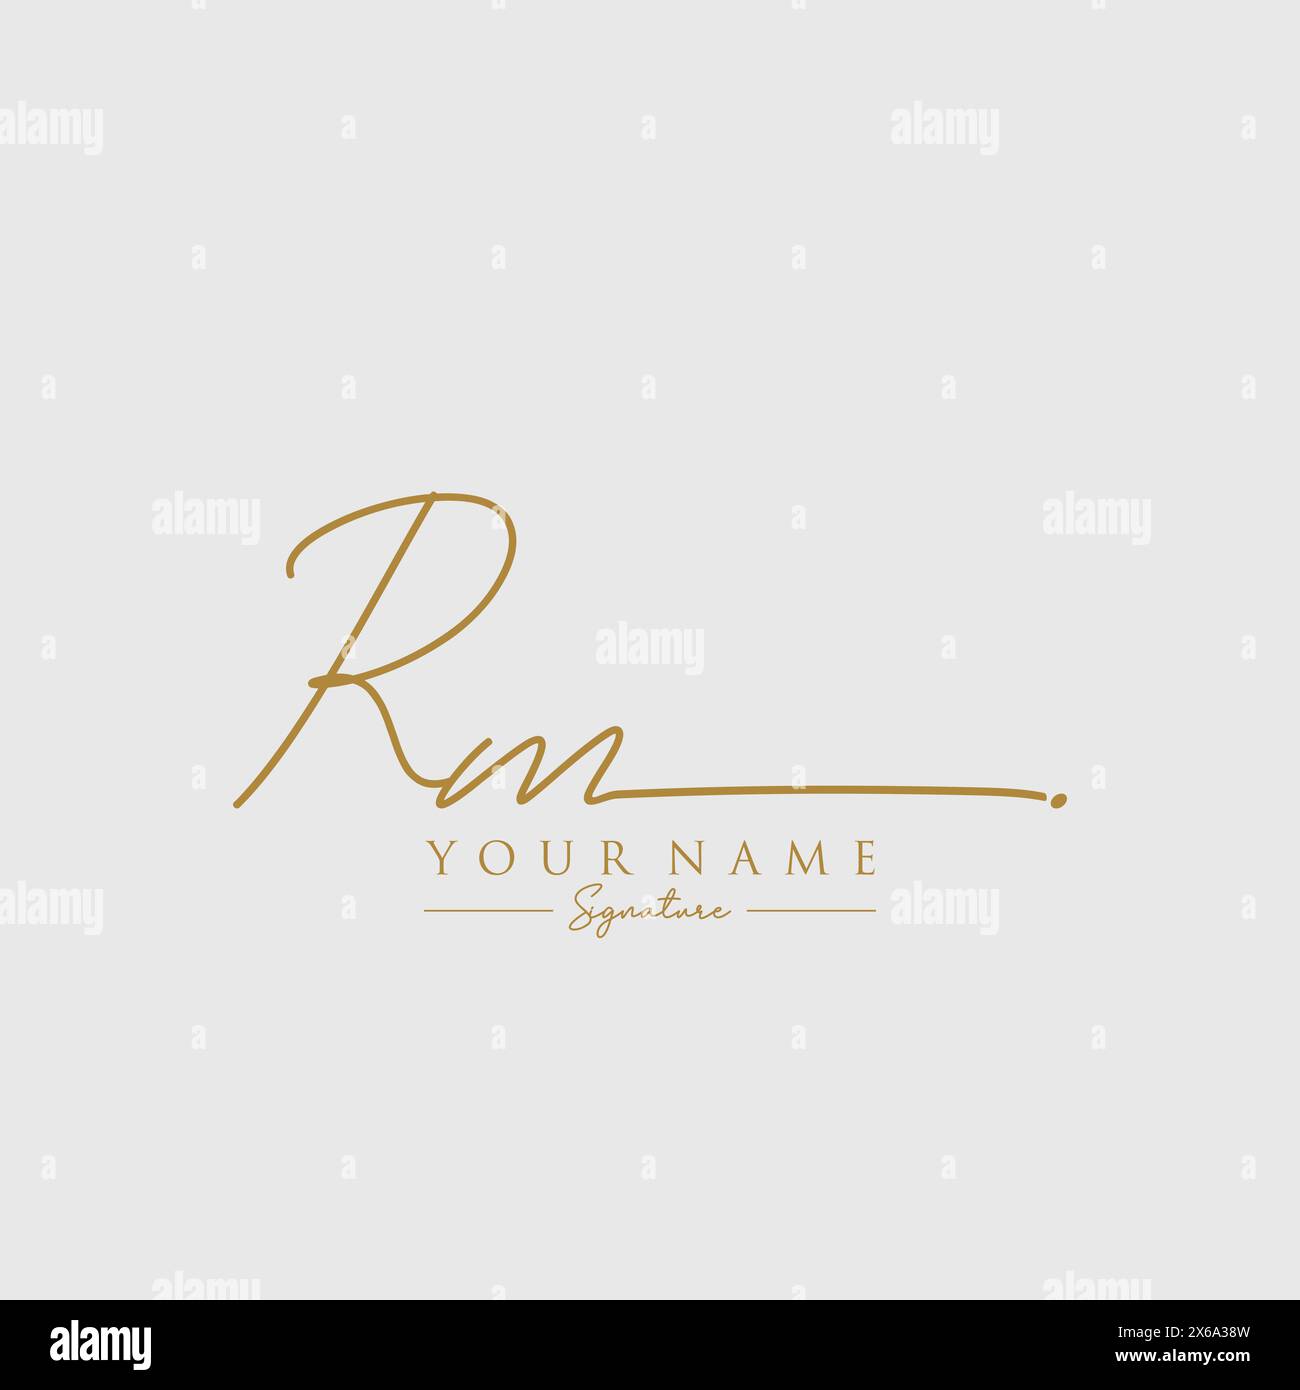 RM Signature Logo Template Stock Vector